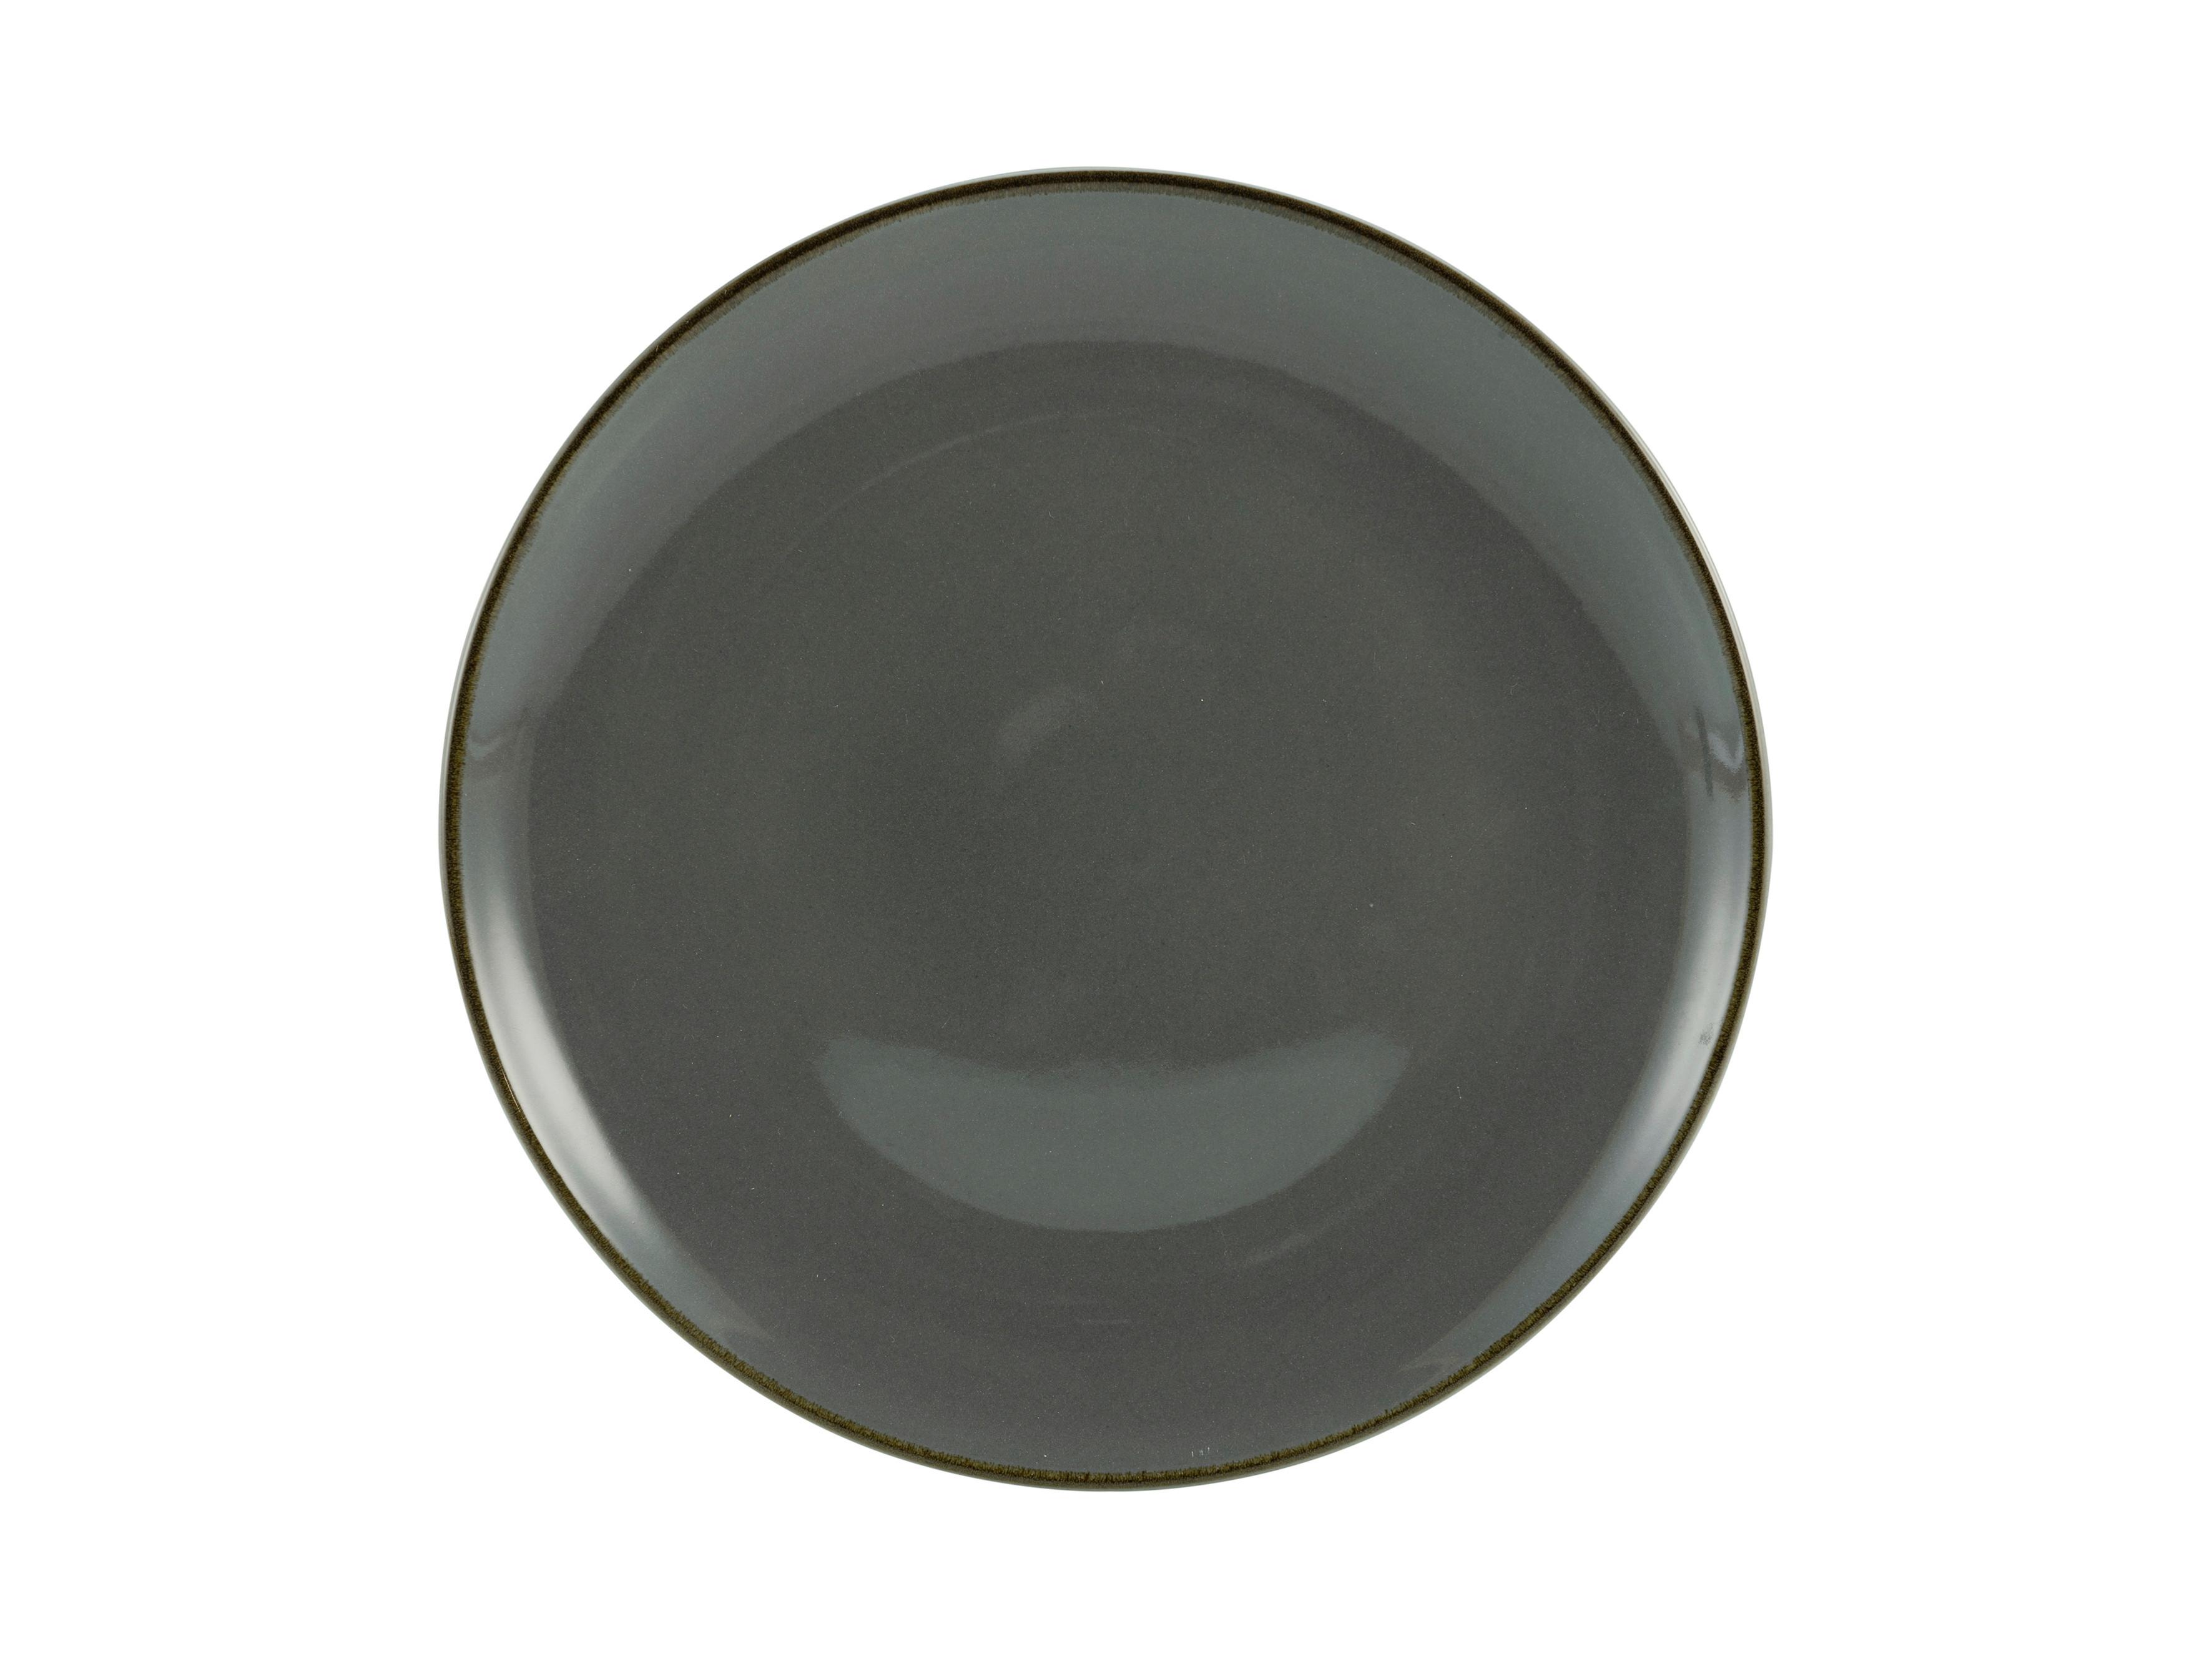 TALERZ DESEROWY LINEN - antracytowy, ceramika (22/22/2,5cm) - Premium Living